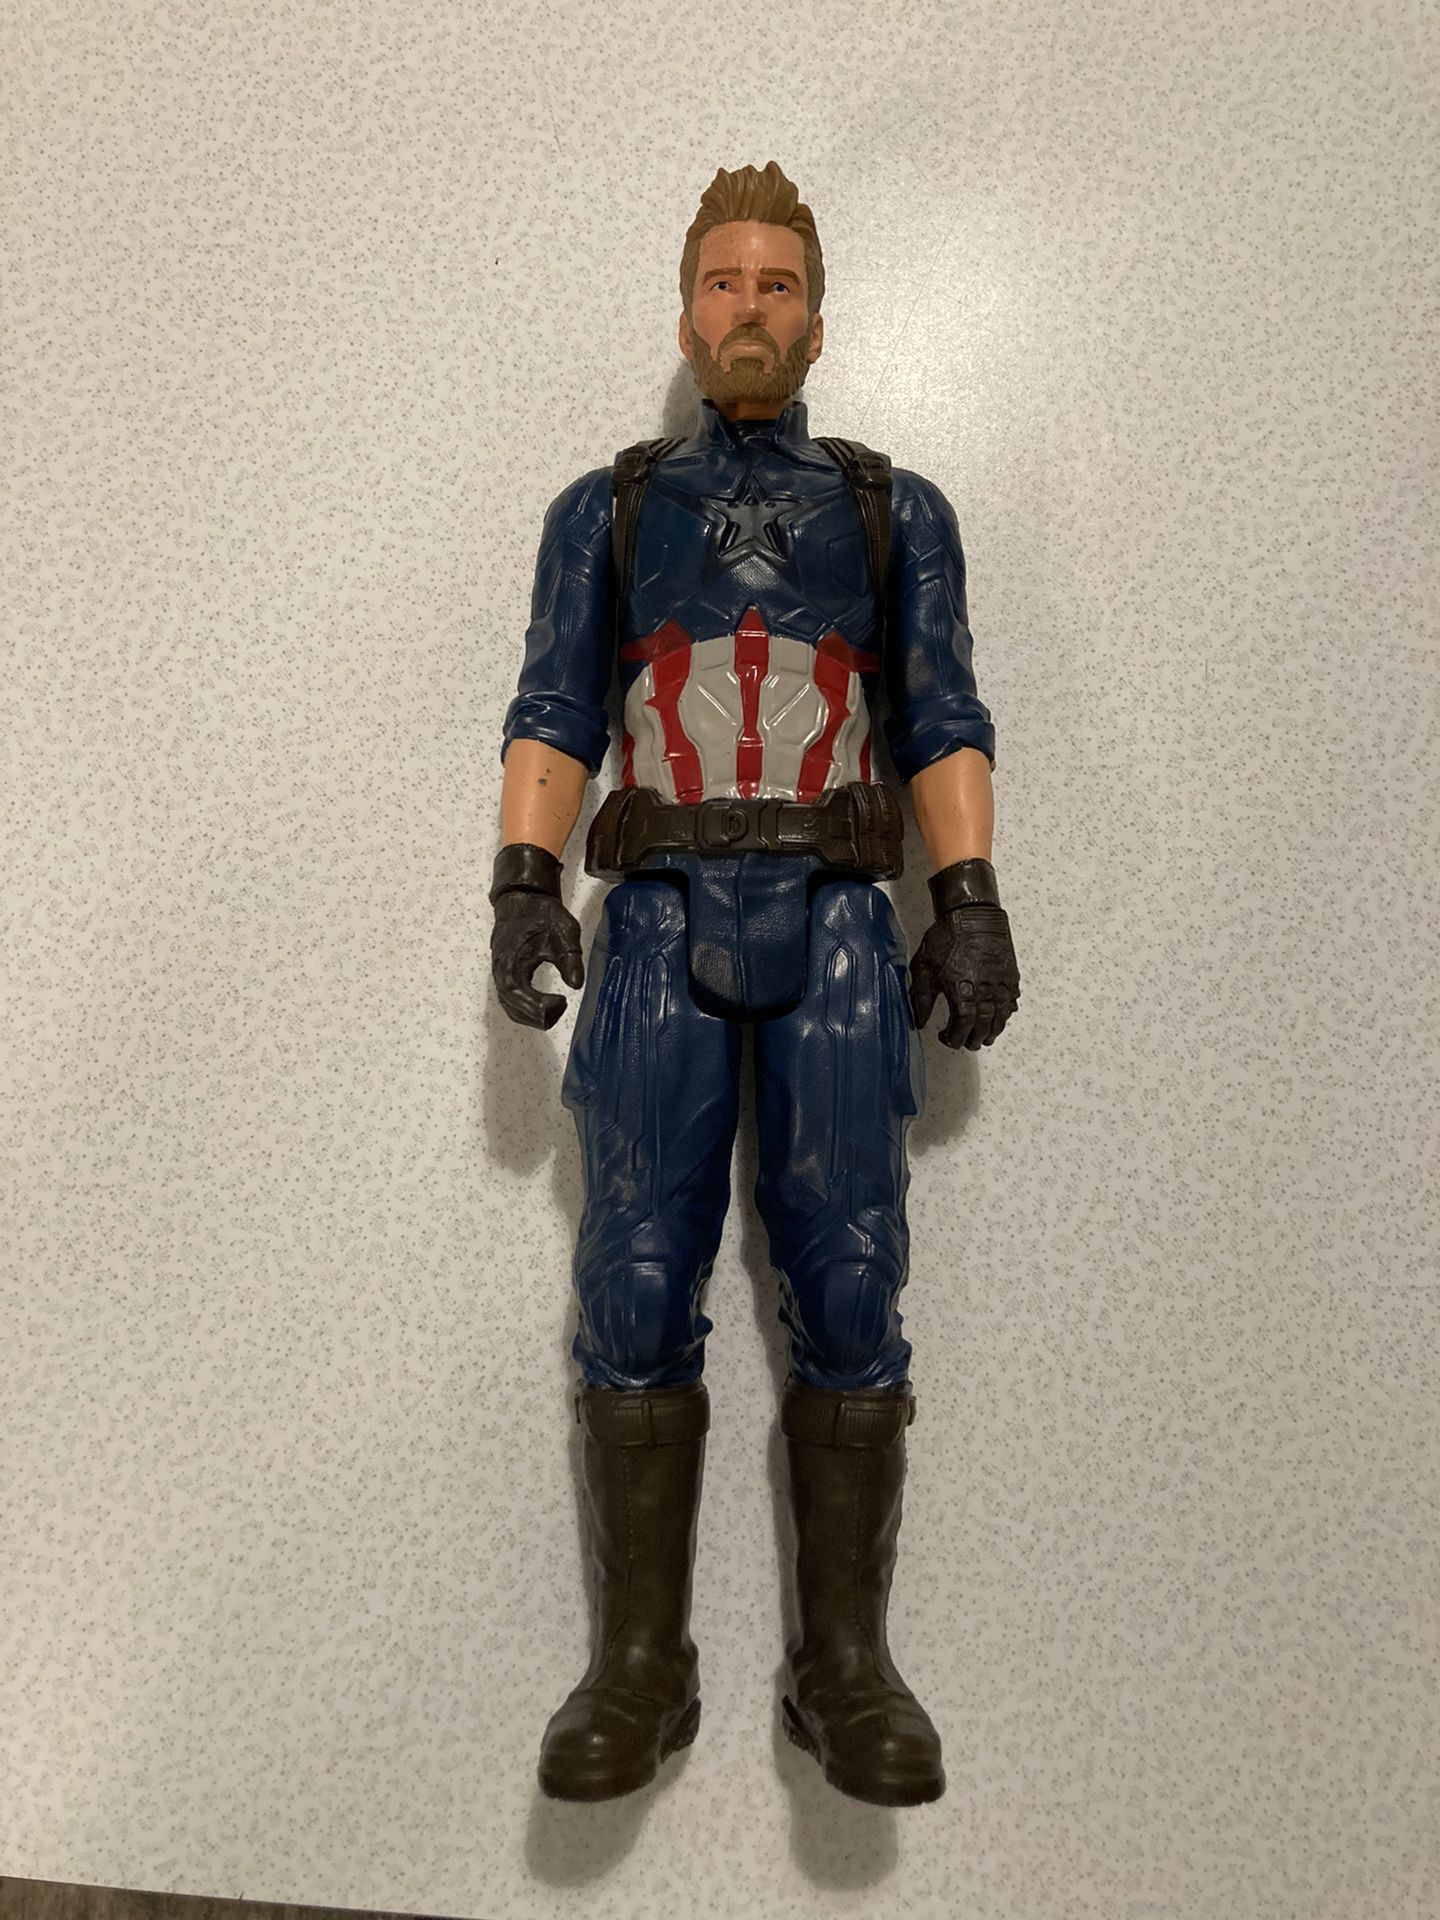 Marvel Comics Avengers Captain America Steve Rogers 12 Inch Action Figure Toy - No Mask!!